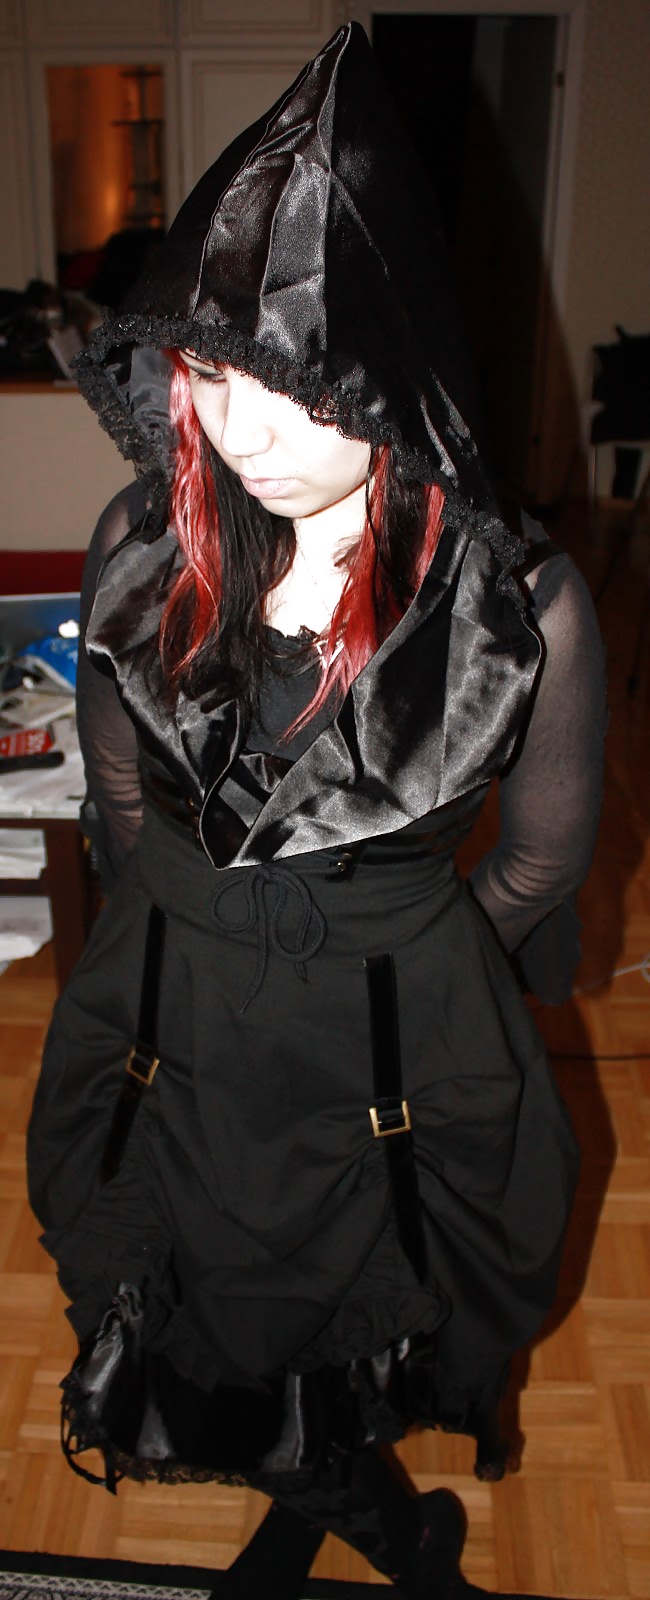 Gothic finnish blog girl #30152236